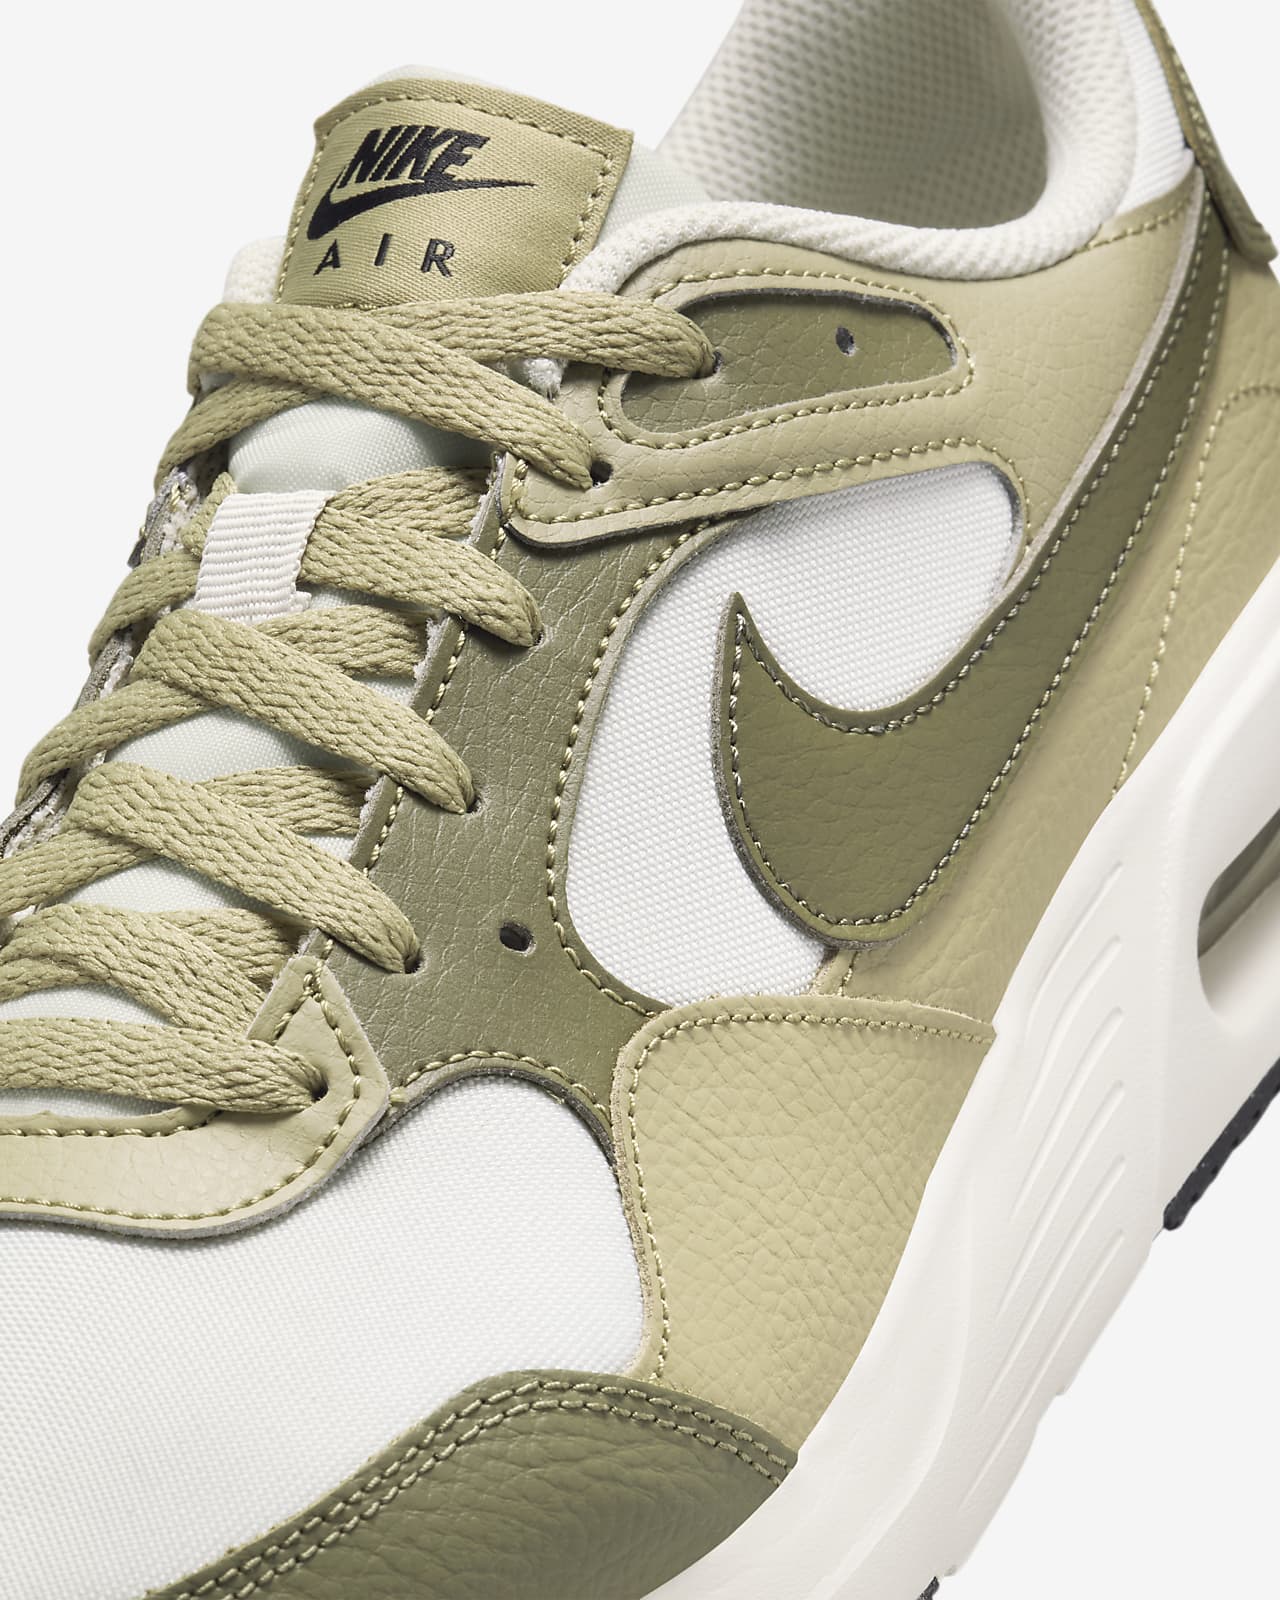 Nike Air Max 1 *Medium Olive* » Buy online now!